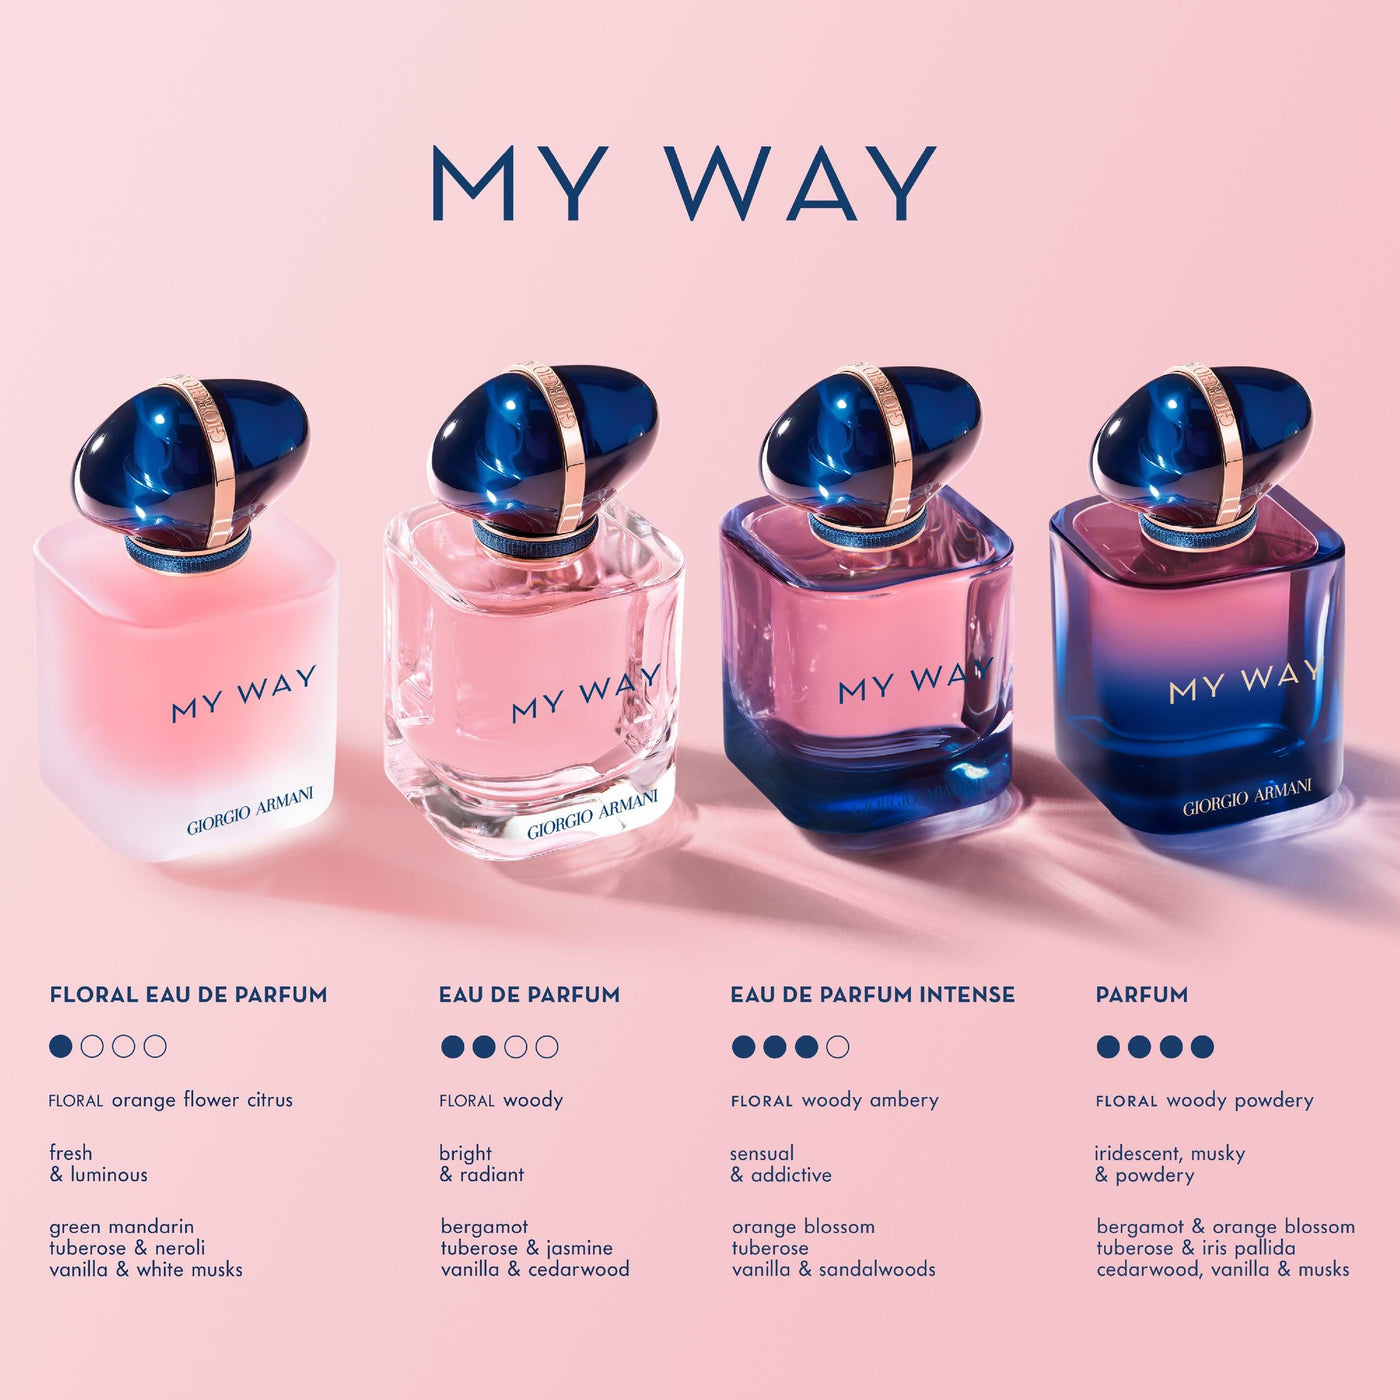 Giorgio Armani - My Way Floral EDP Refill 150ml - Ascent Luxury Cosmetics